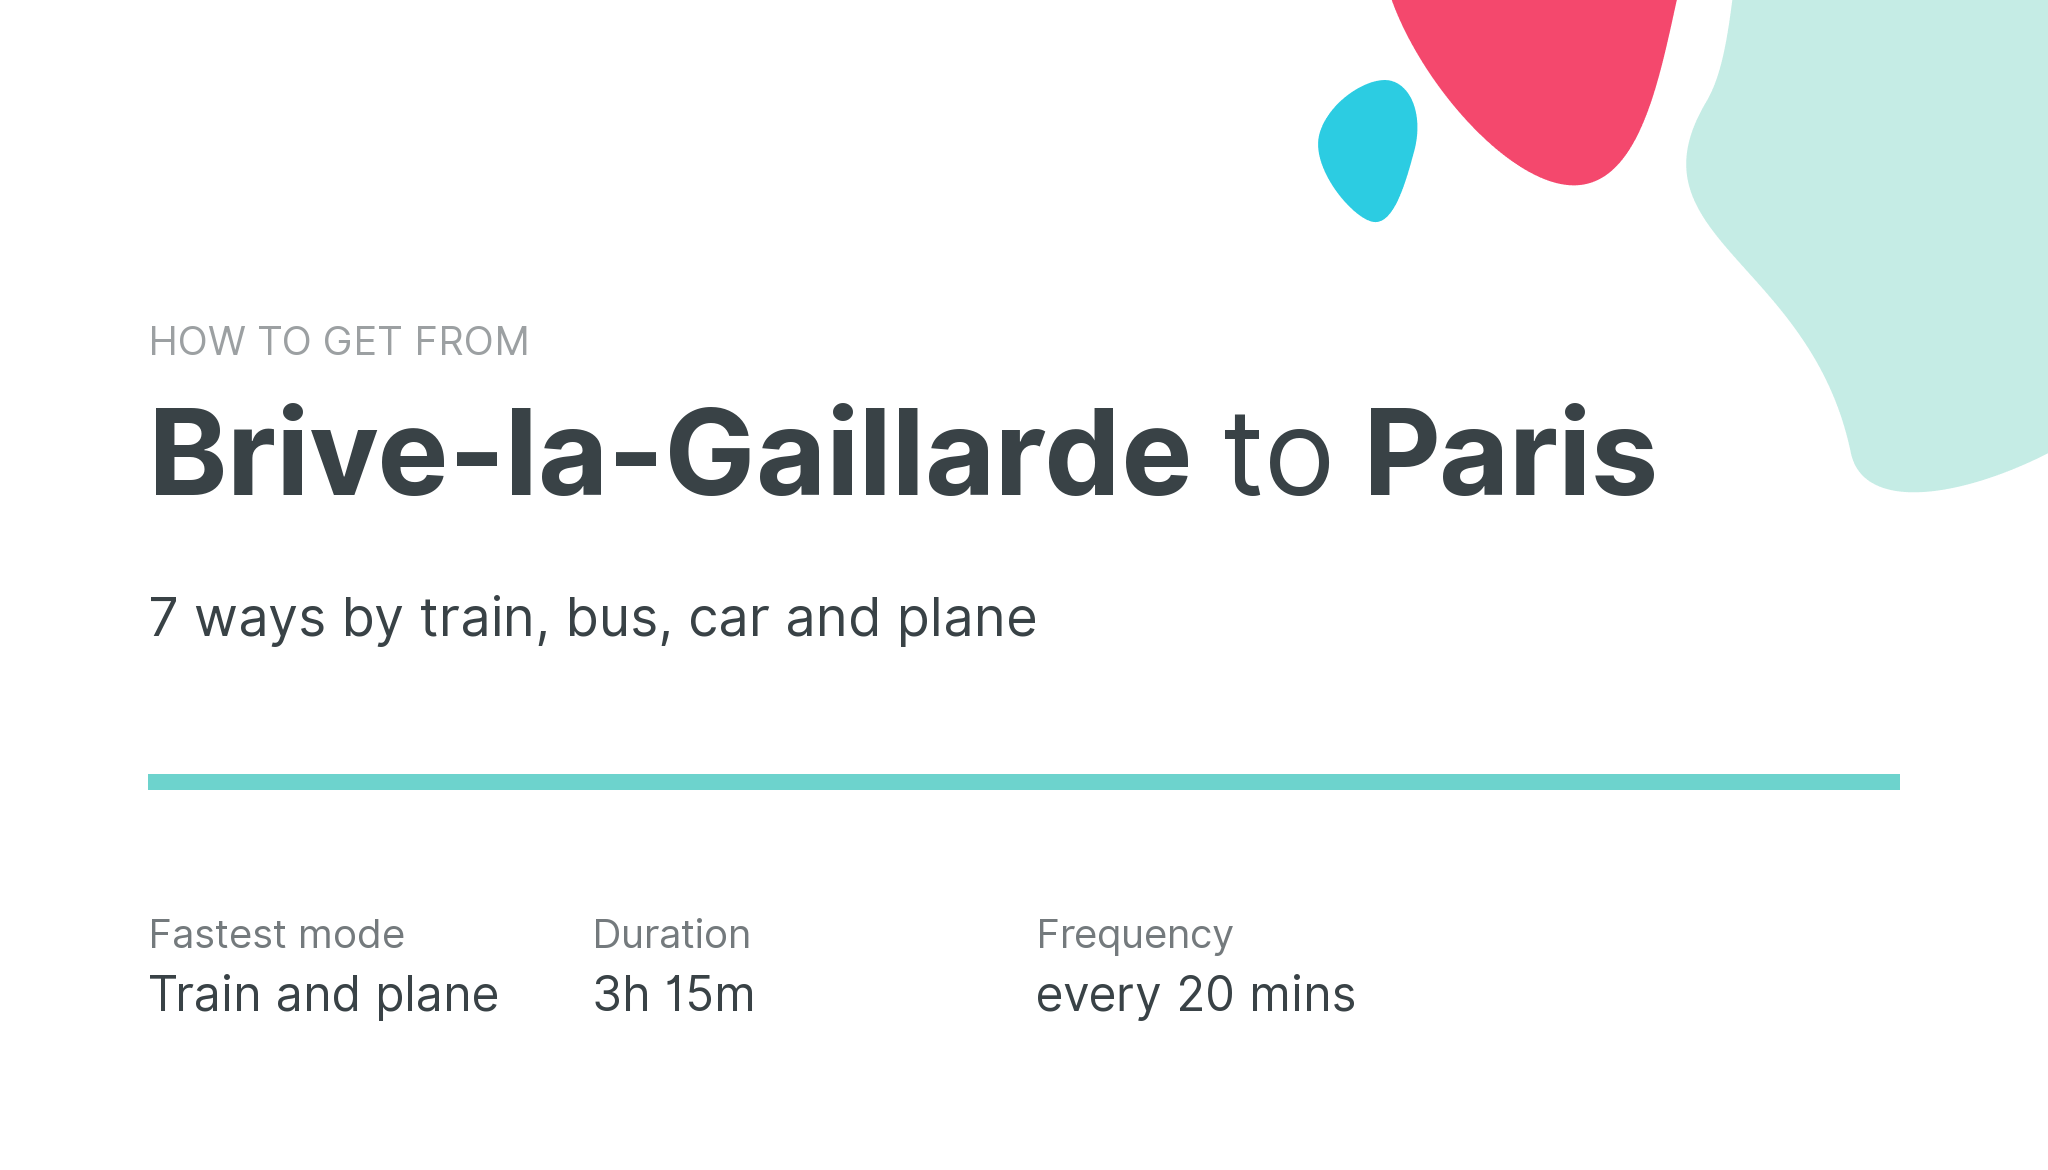 How do I get from Brive-la-Gaillarde to Paris